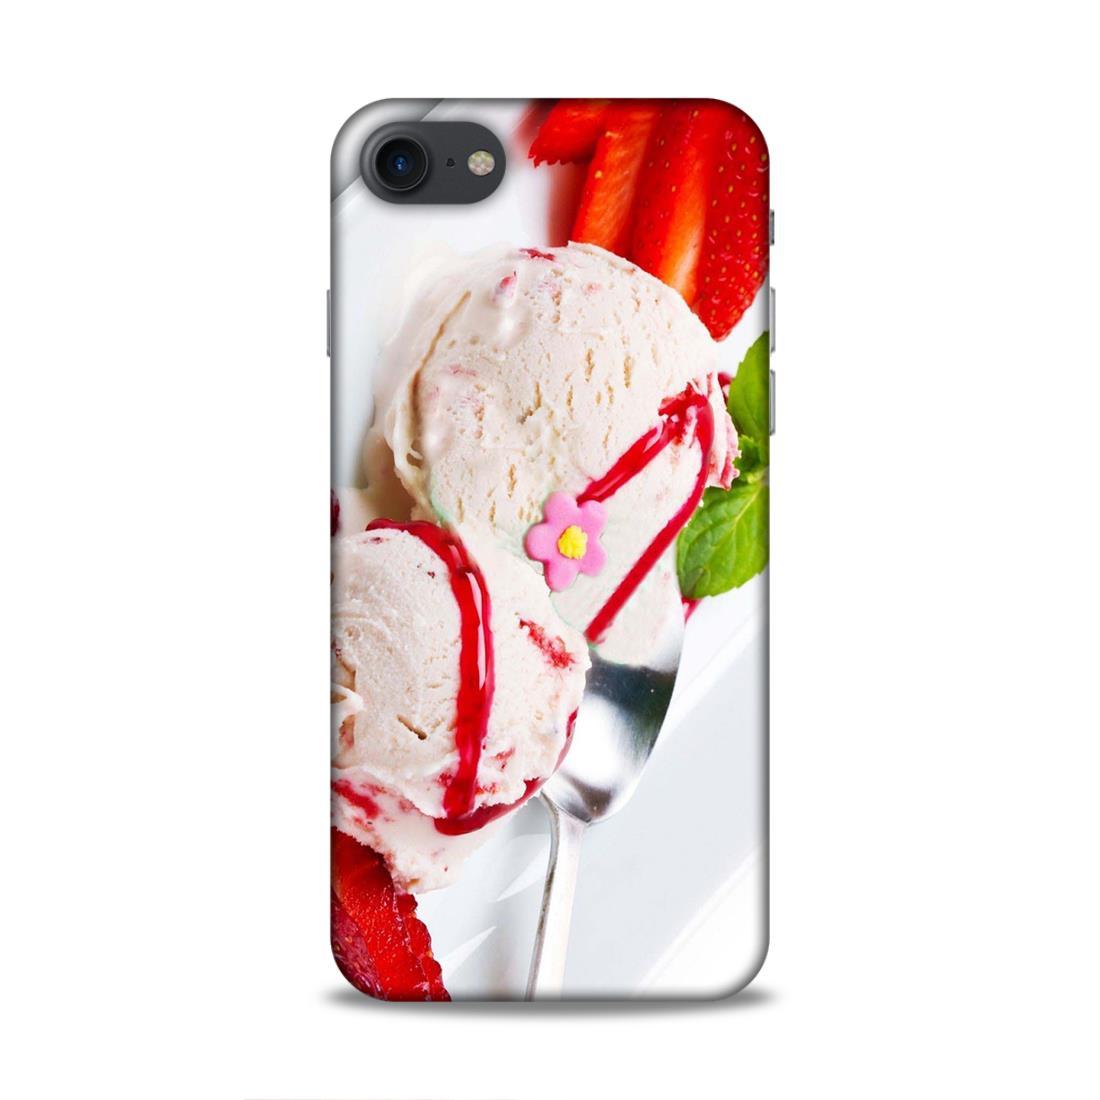 Icecream Love iPhone 7 Mobile Cover